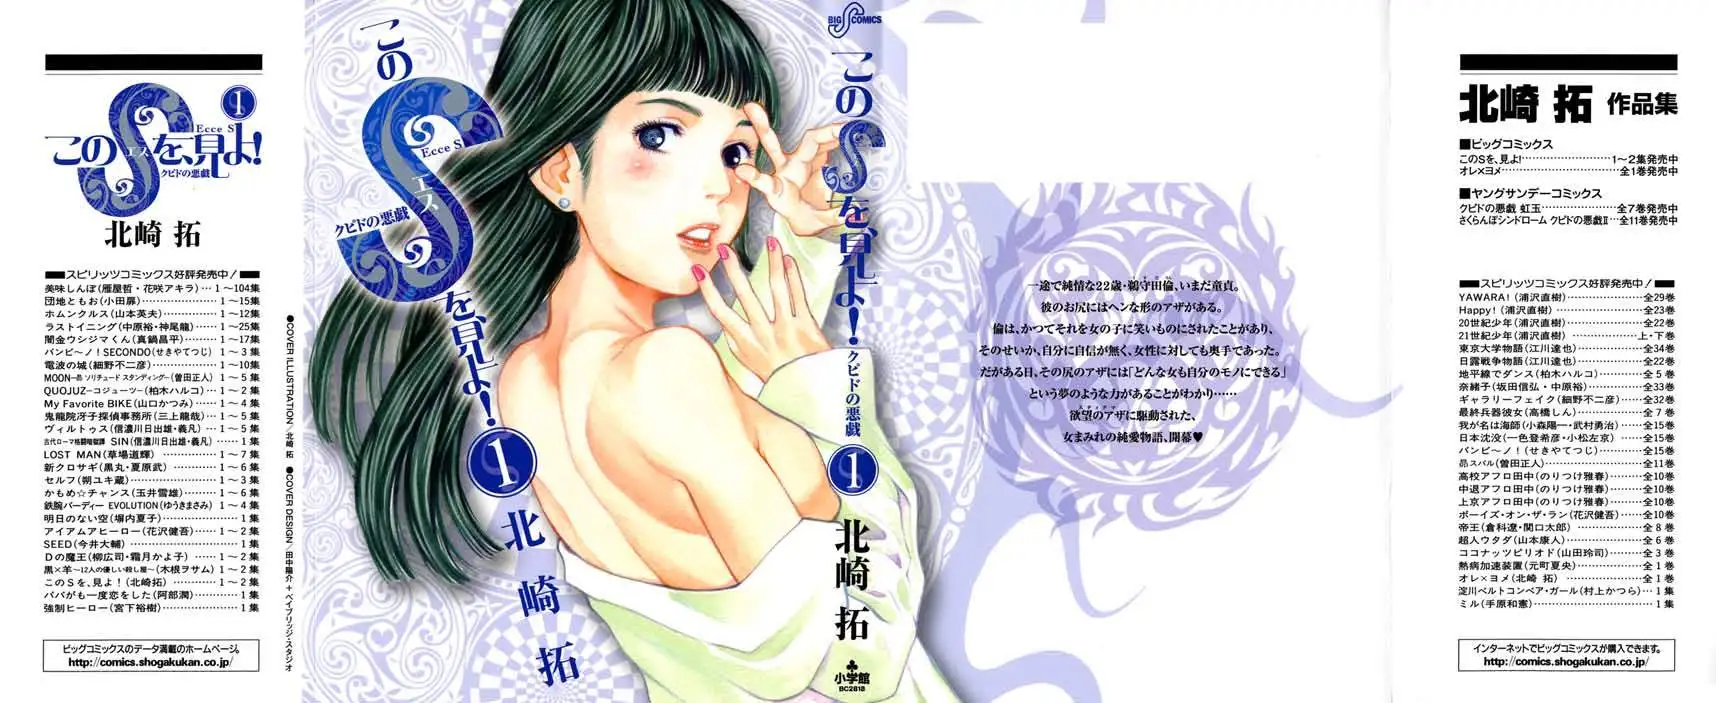 Kono S o, Mi yo! – Cupid no Itazura - Chapter 1 Page 1